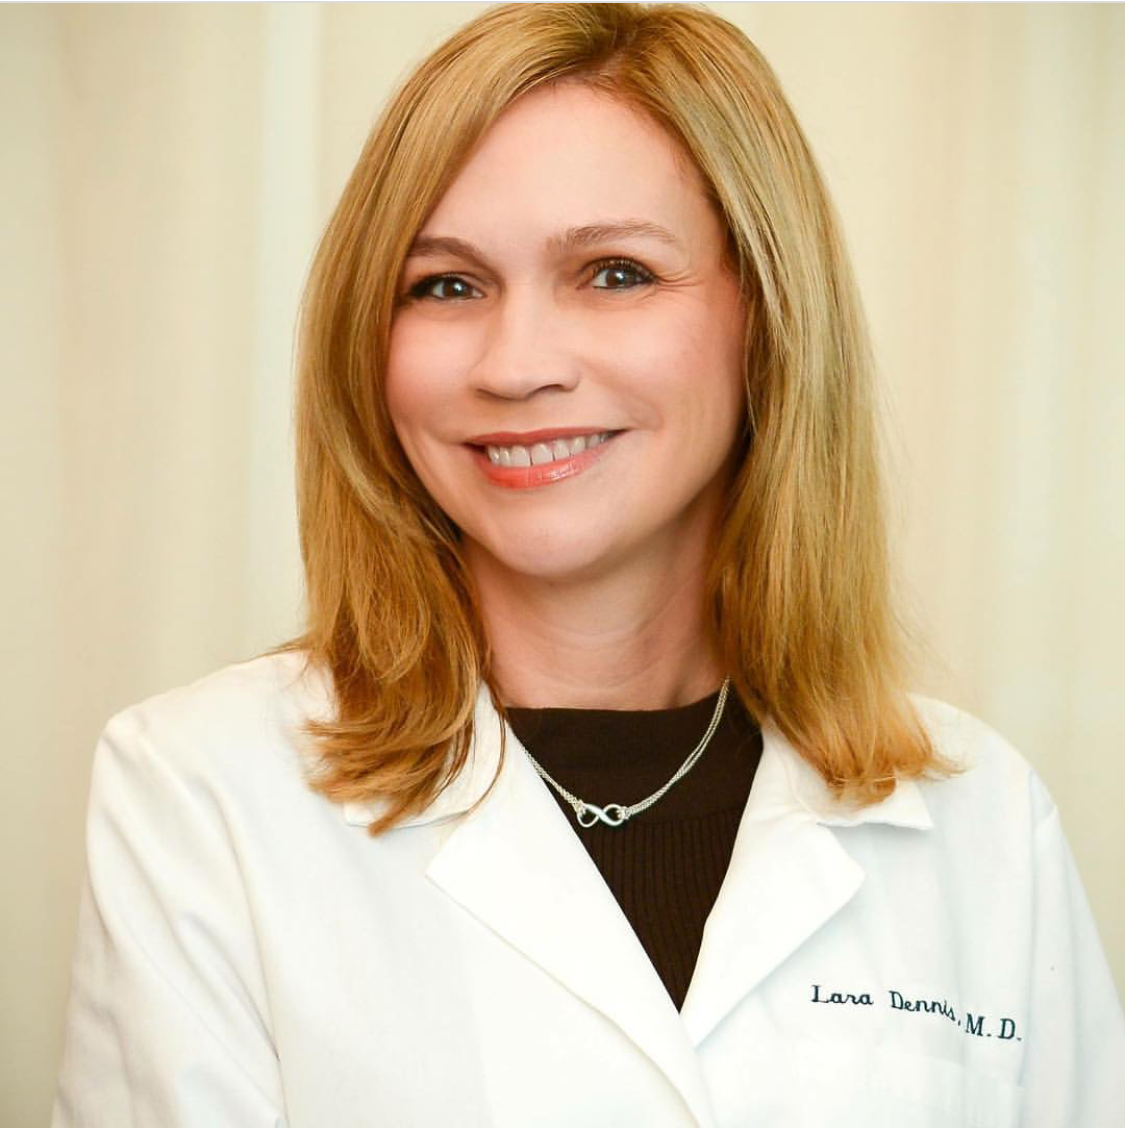 Women Physicians Day Lara Dennis, MD